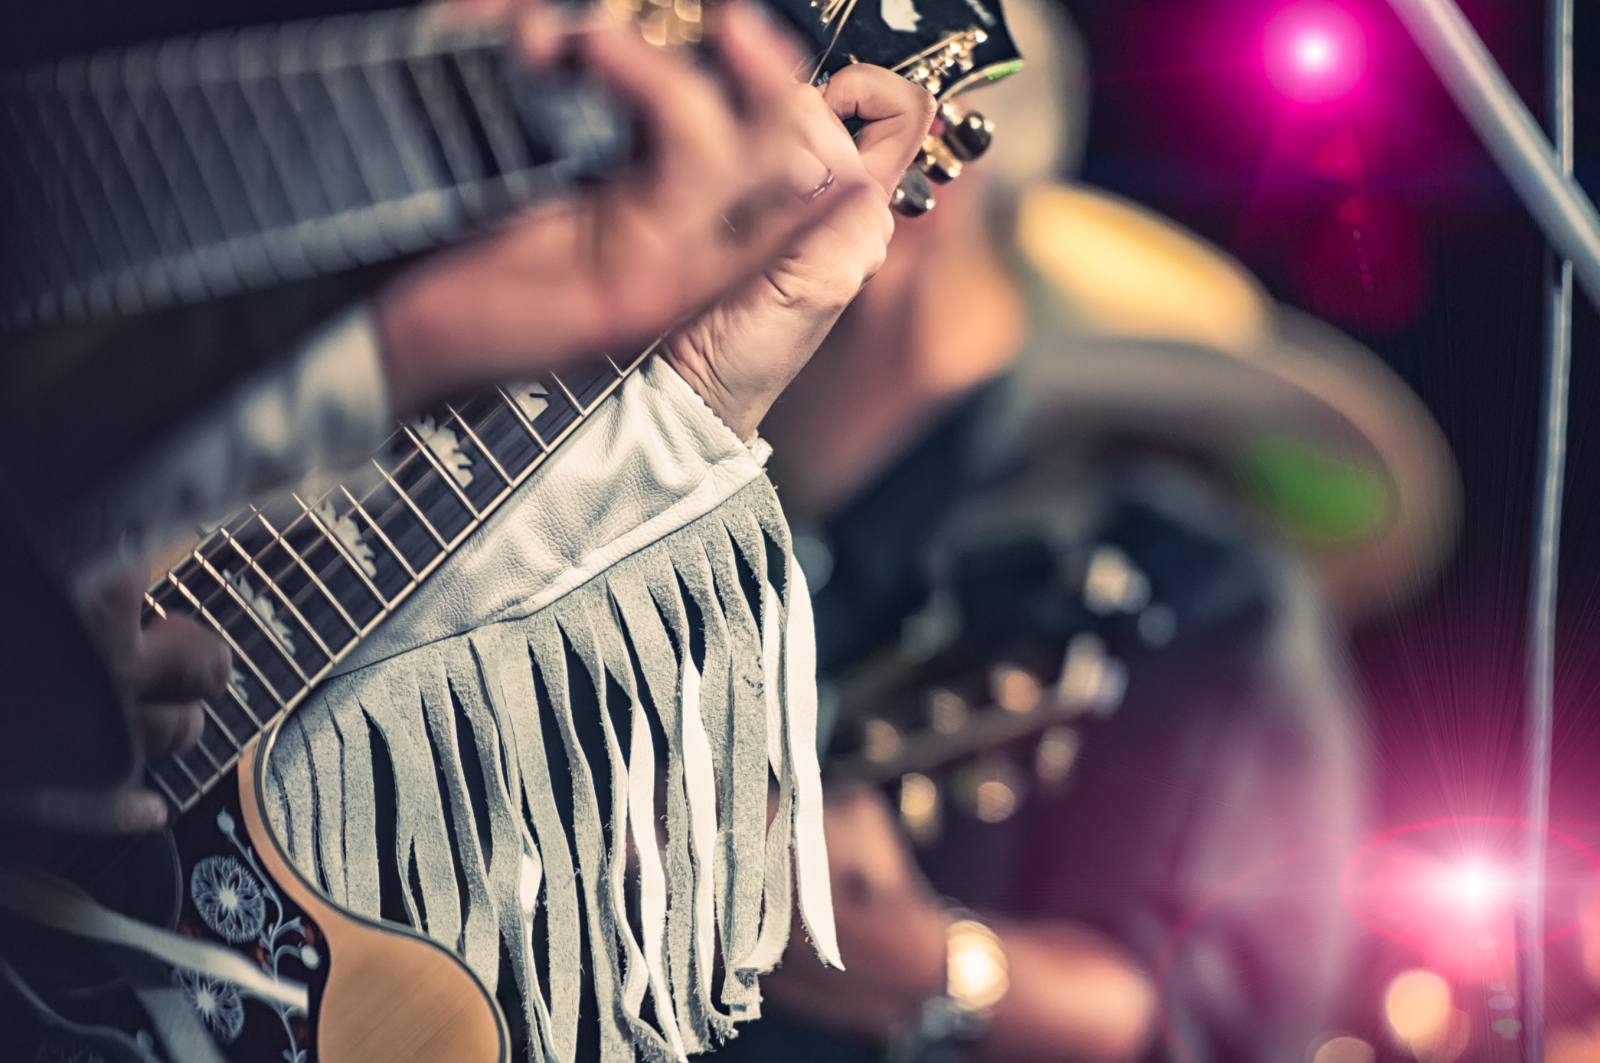 Closeup shot of someone playing a guitar